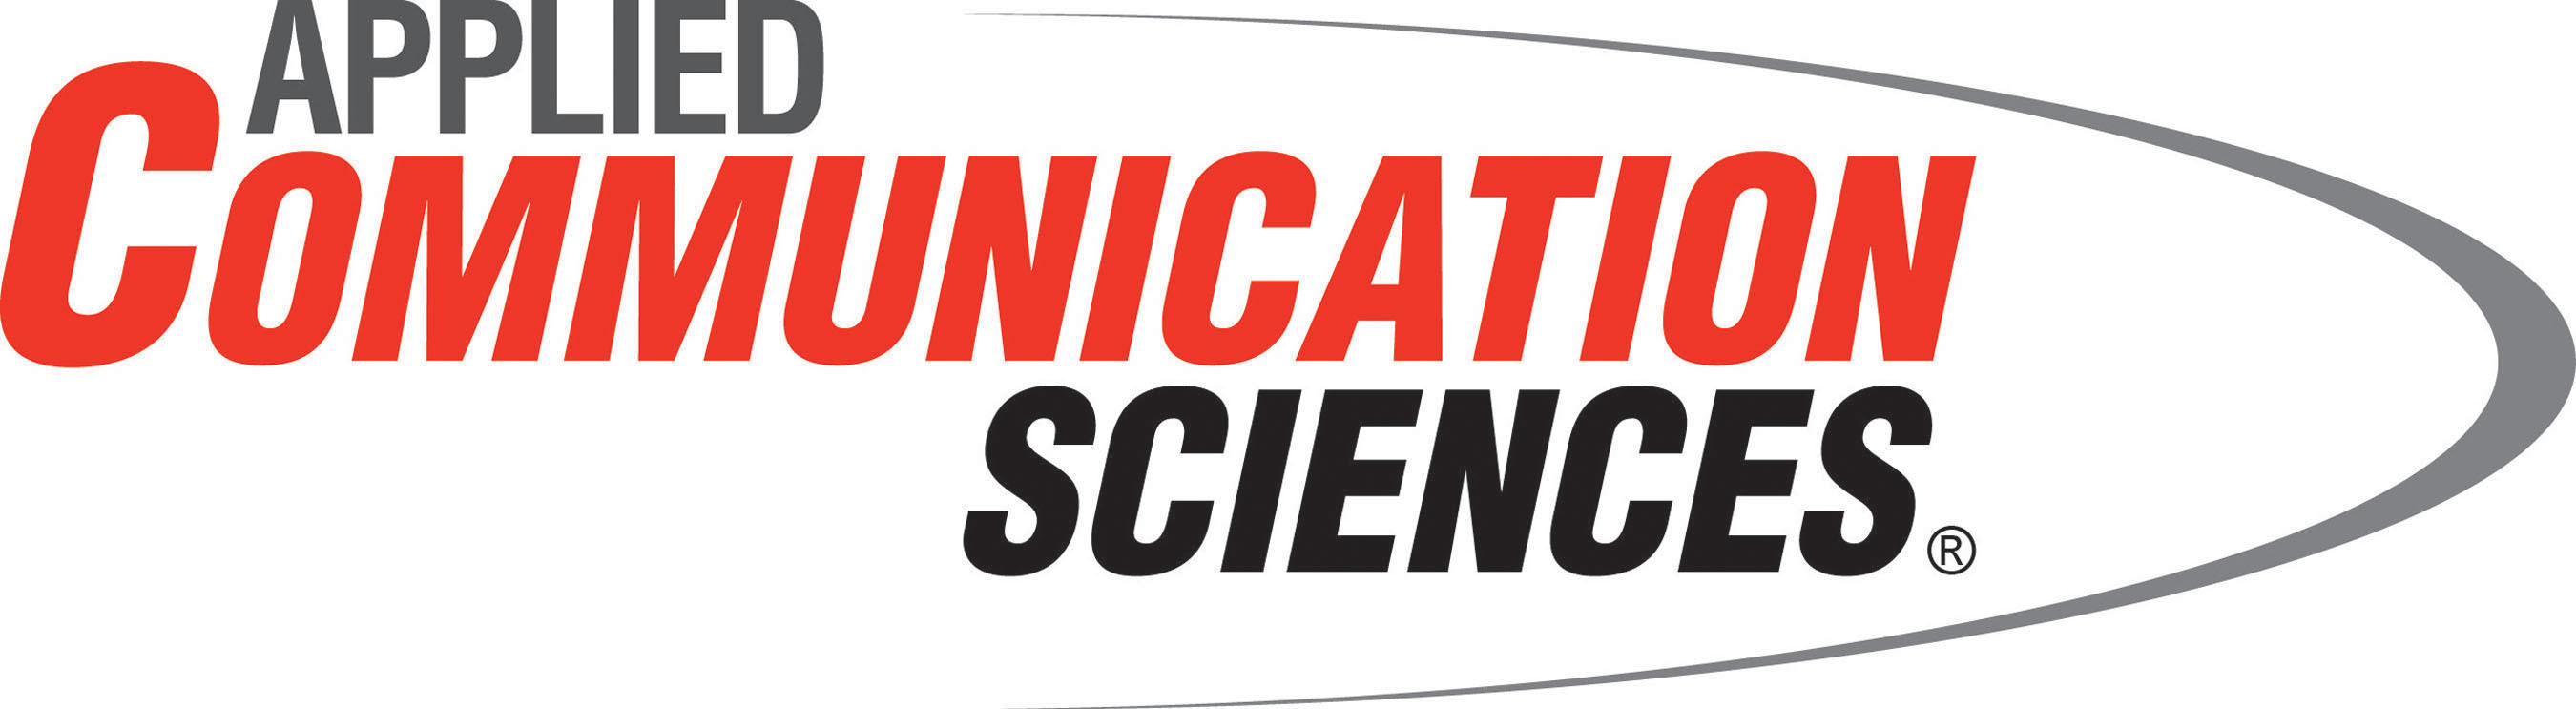 Applied Communication Sciences logo.